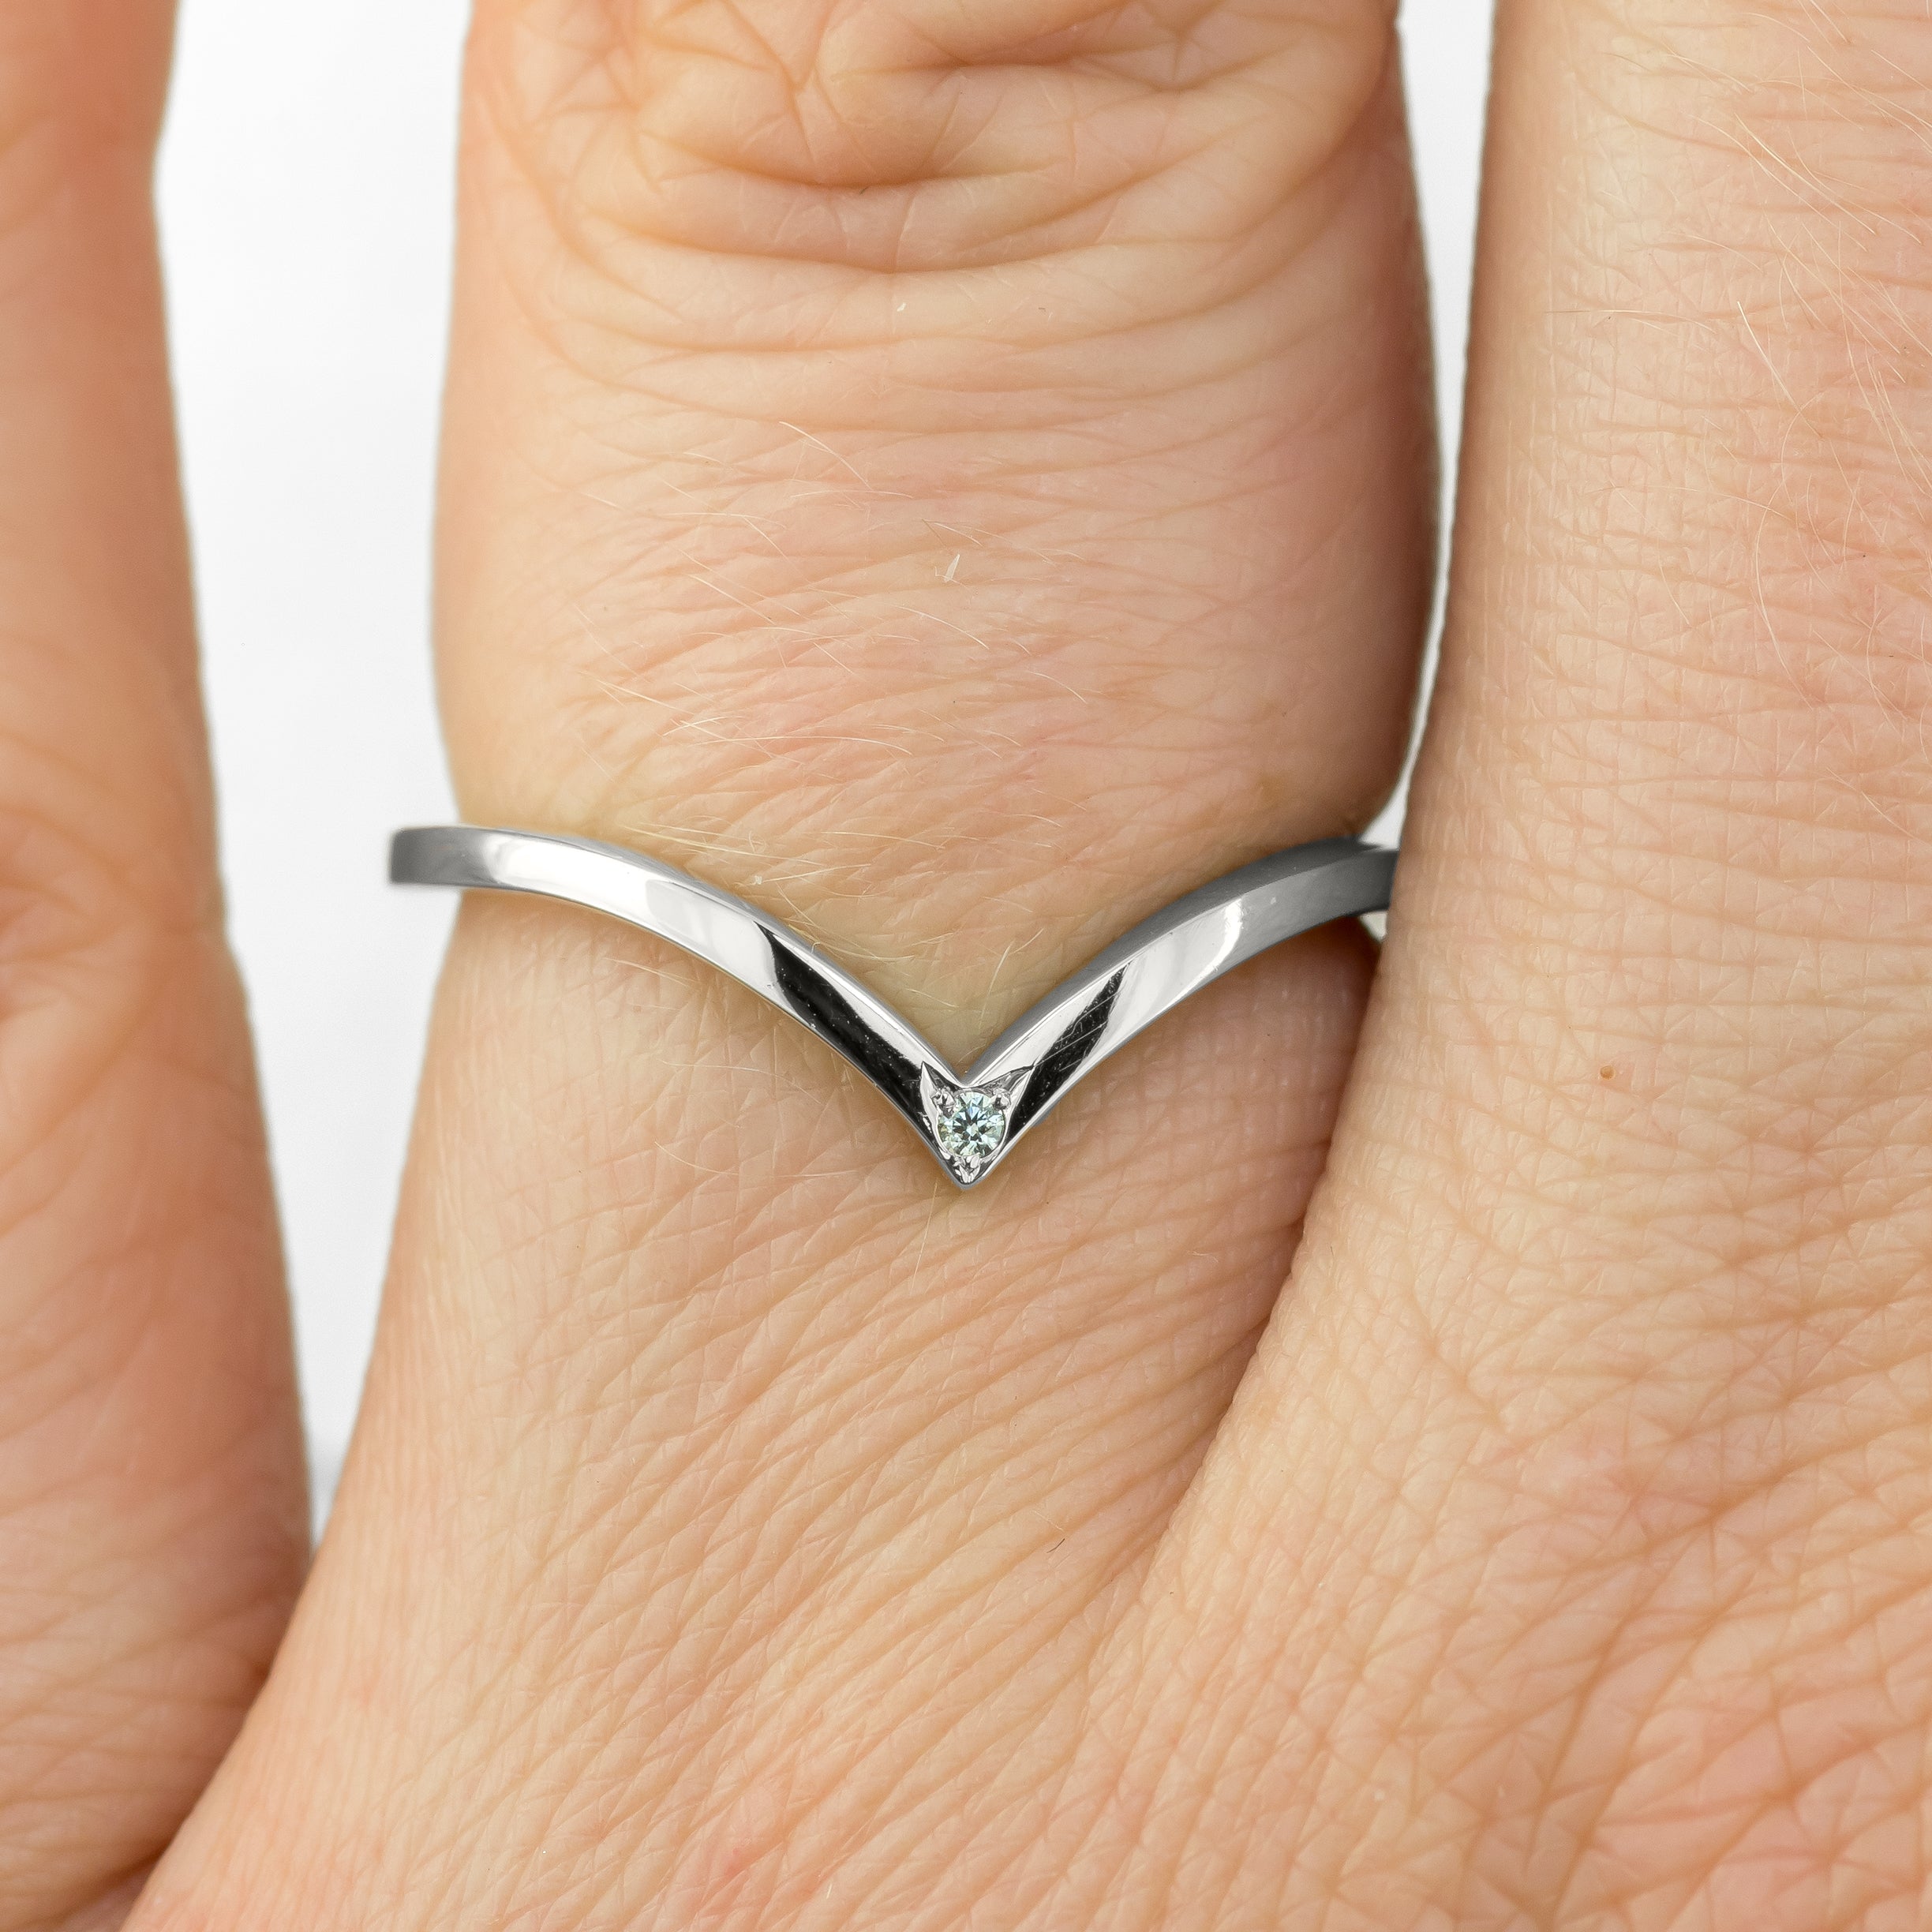 Round Ellegent V Shaped Designer Diamond Ring at Rs 28000 in Mumbai | ID:  27402606962